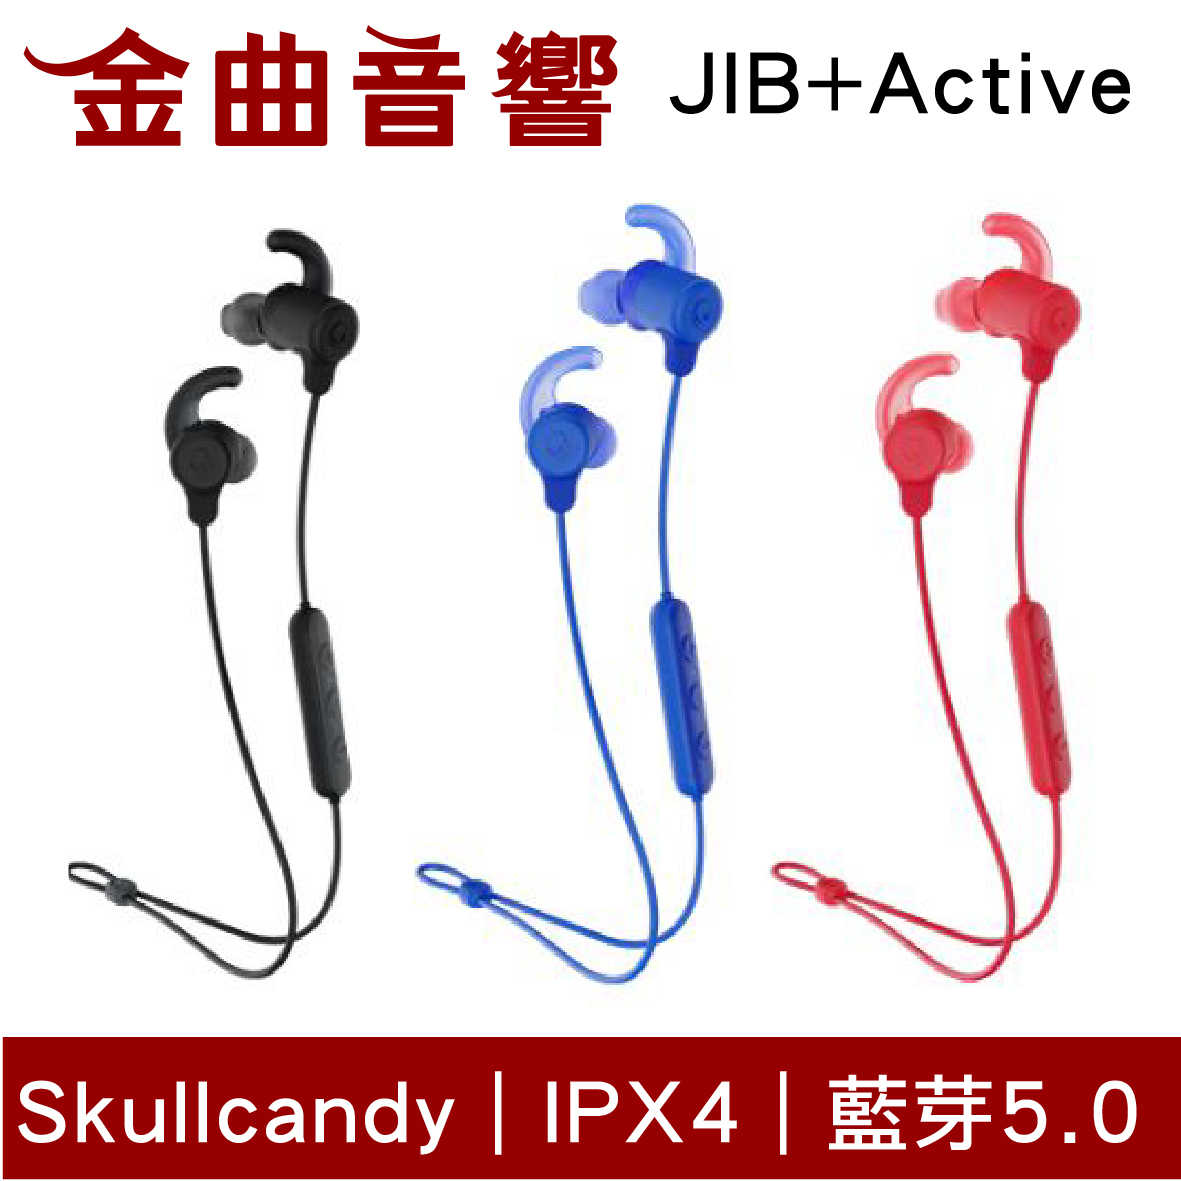 Skullcandy 骷髏糖 Jib+Active IPX4 藍芽 運動 耳機 | 金曲音響